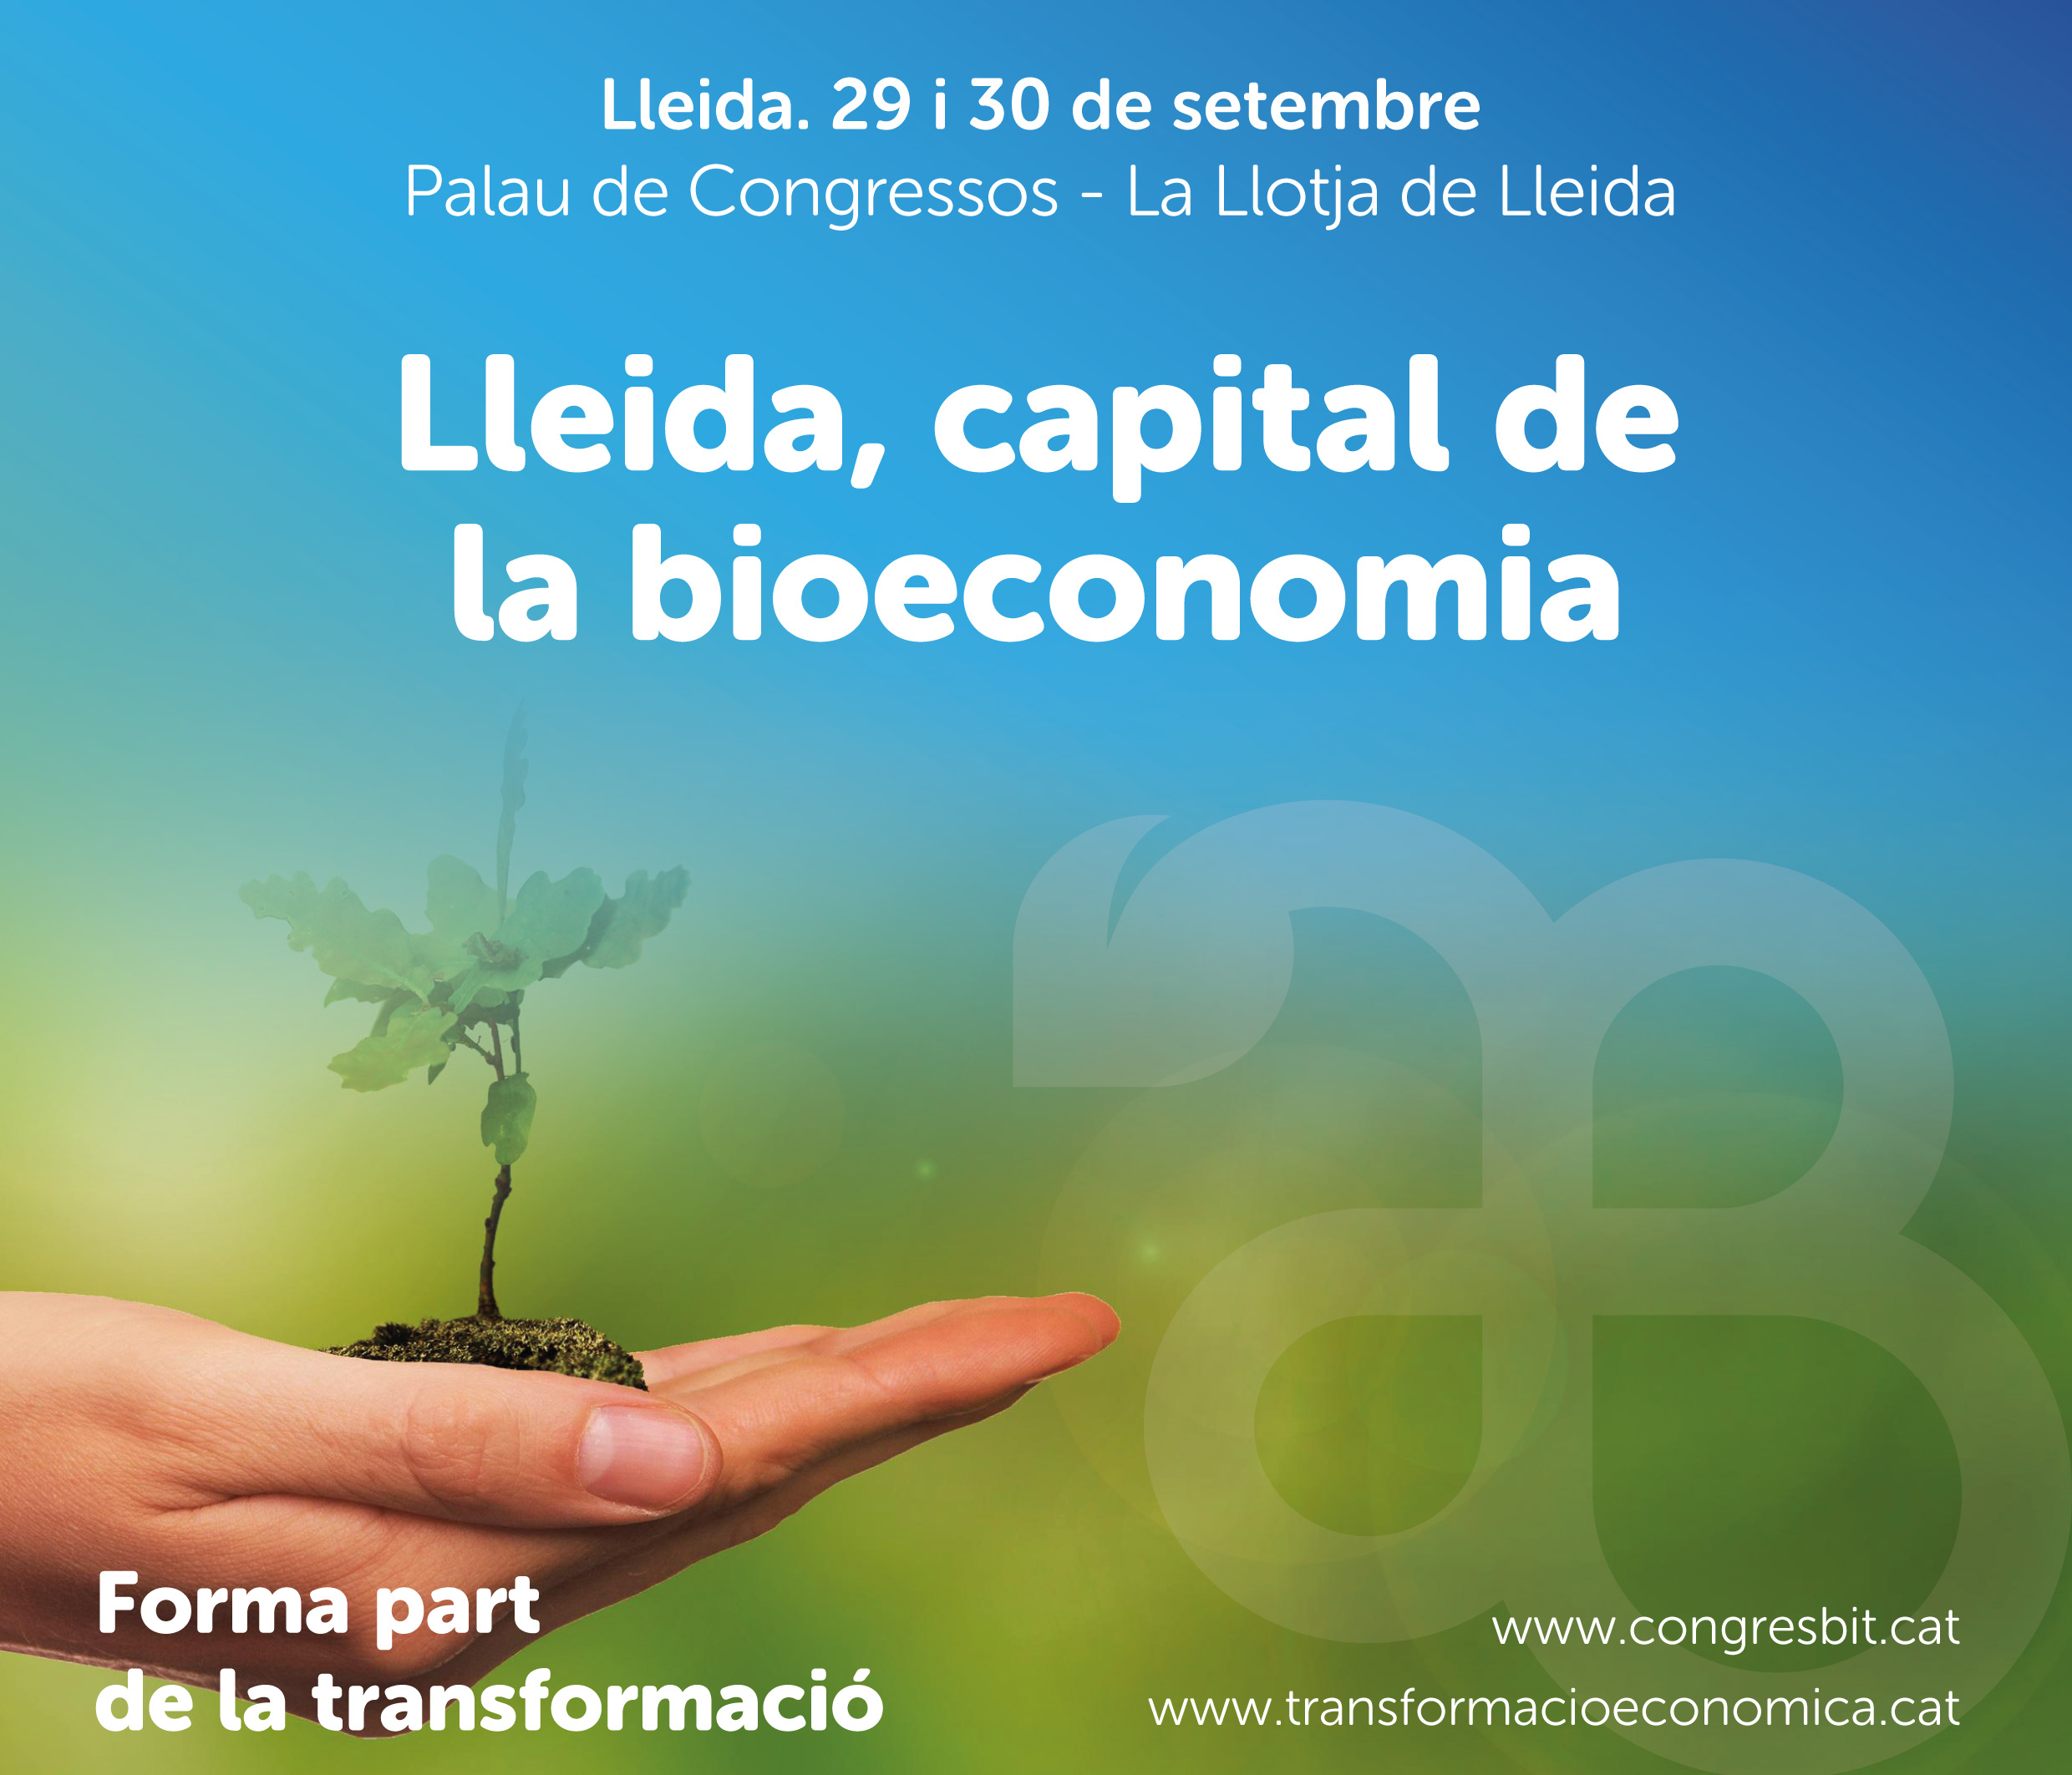 Lleida capital de la bioeconomia de Catalunya